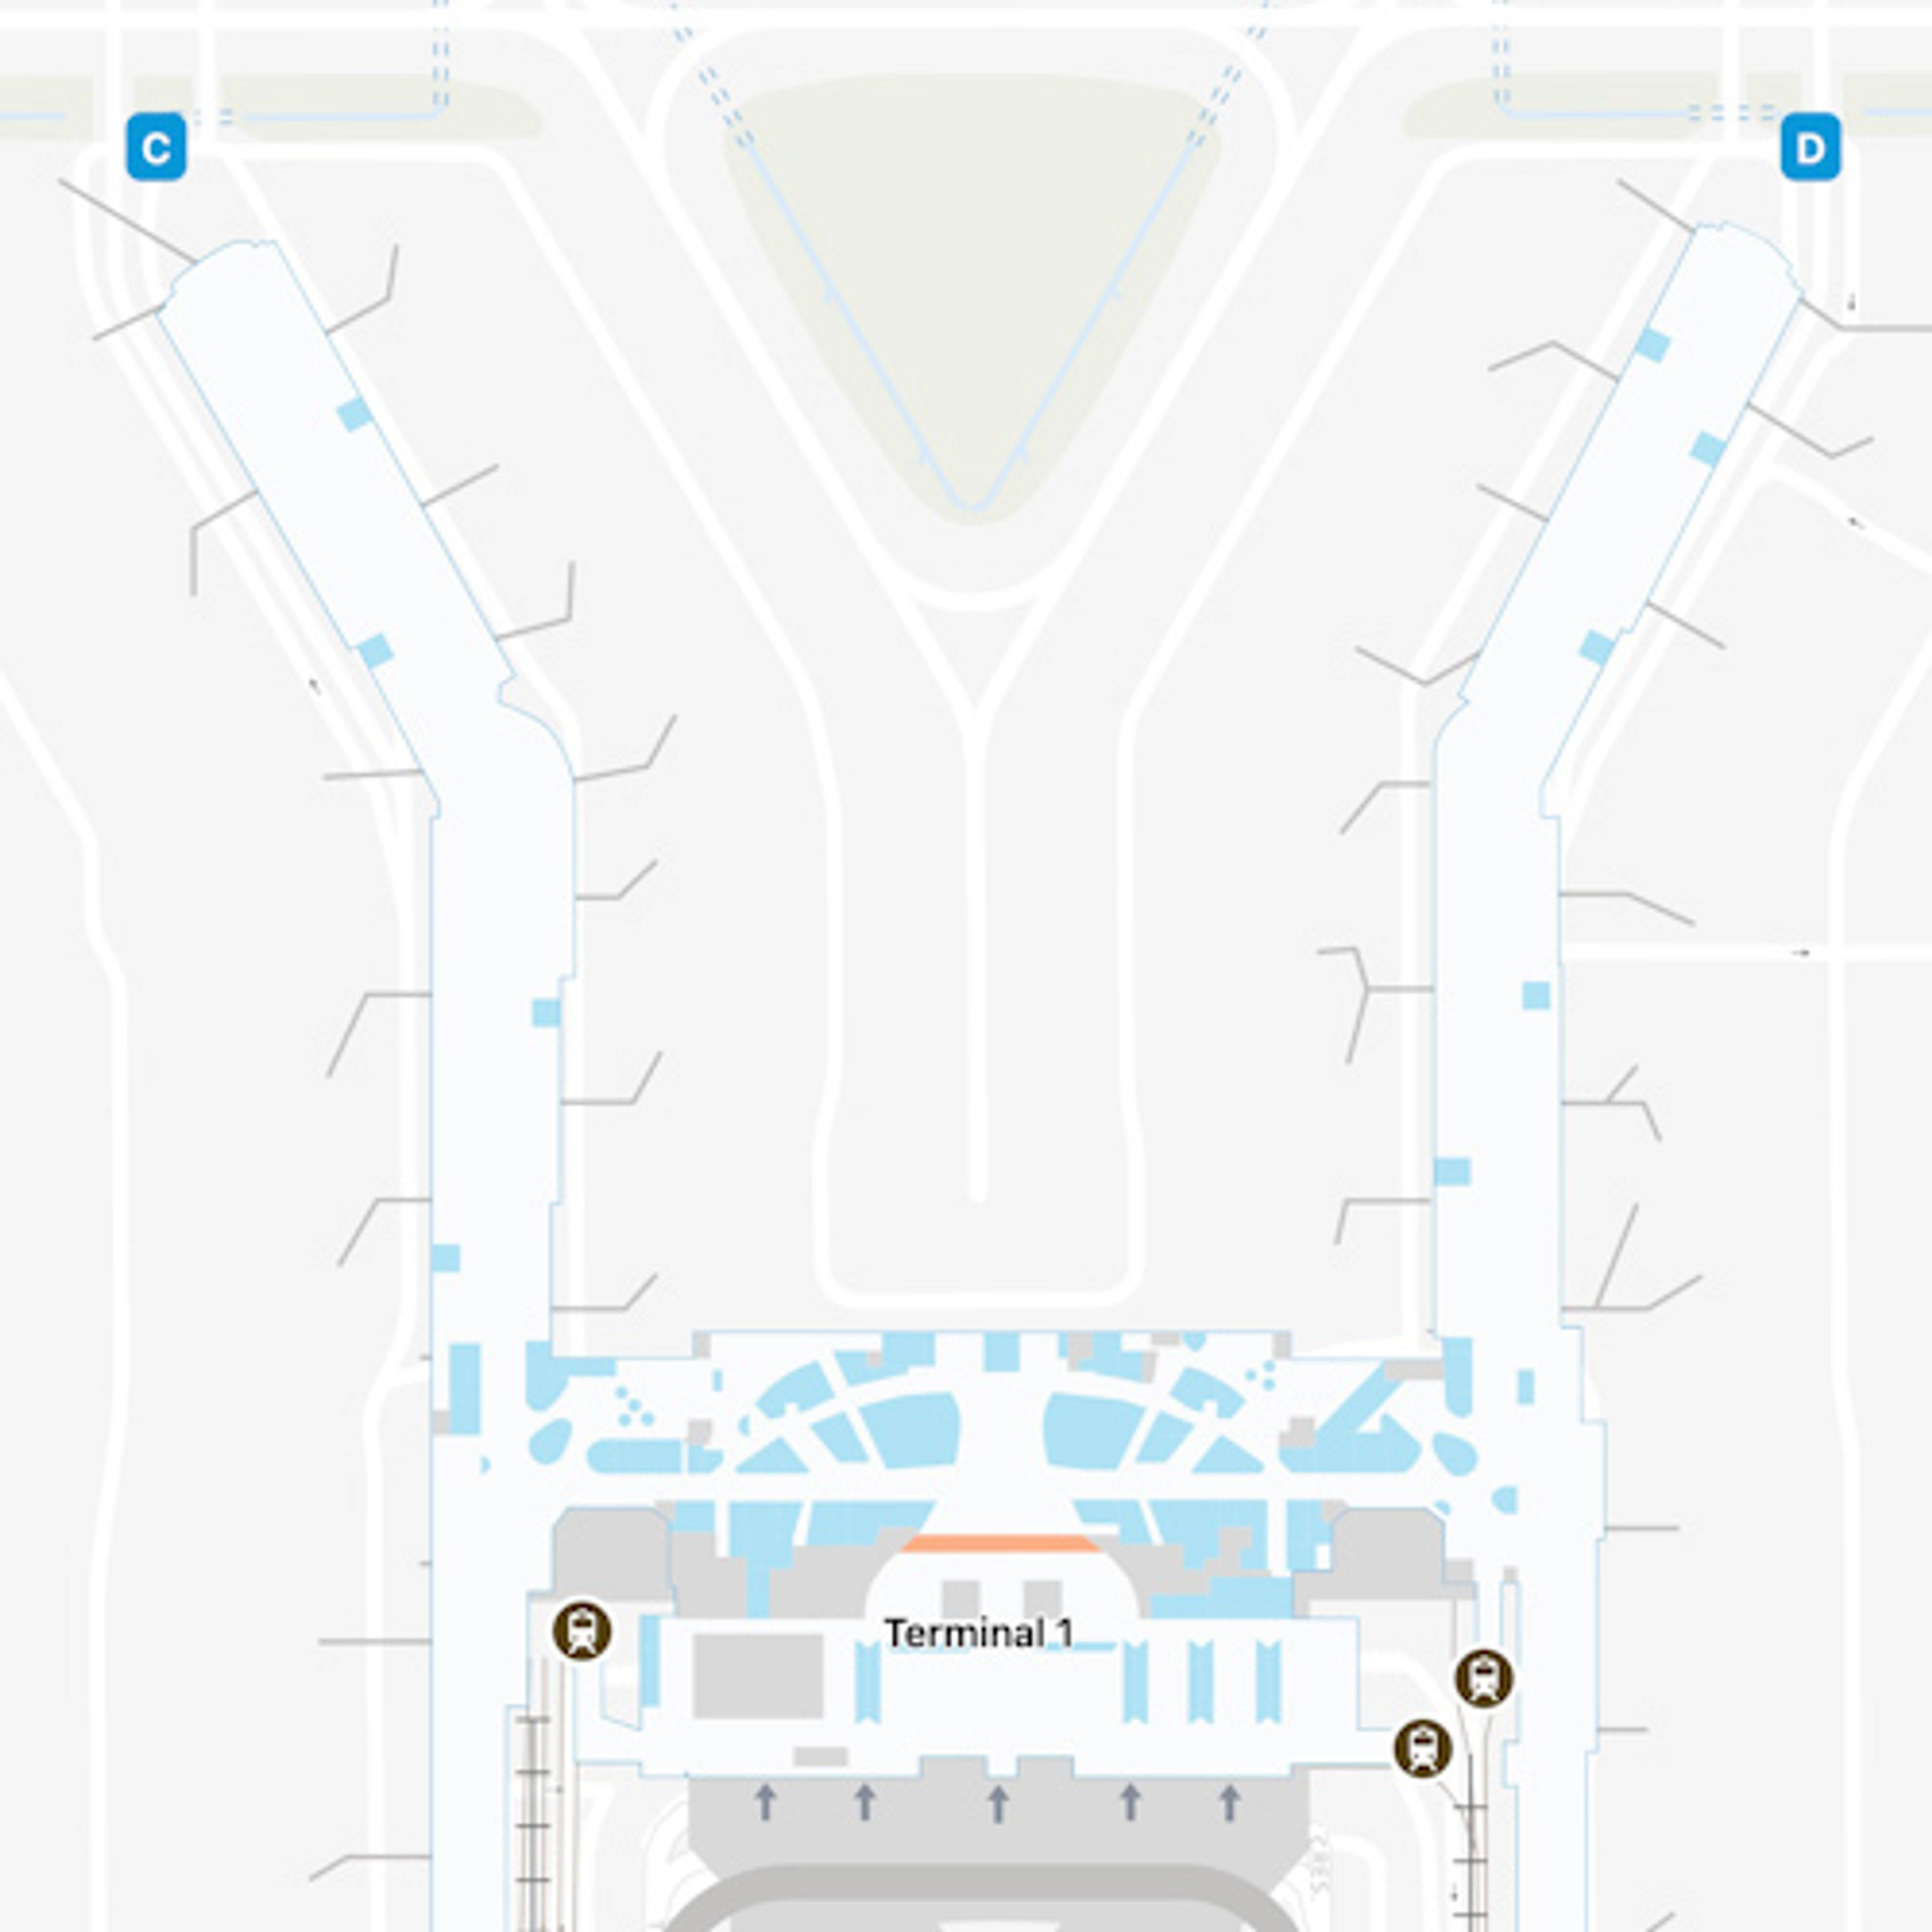 Singapore Airport Terminal 1 Map